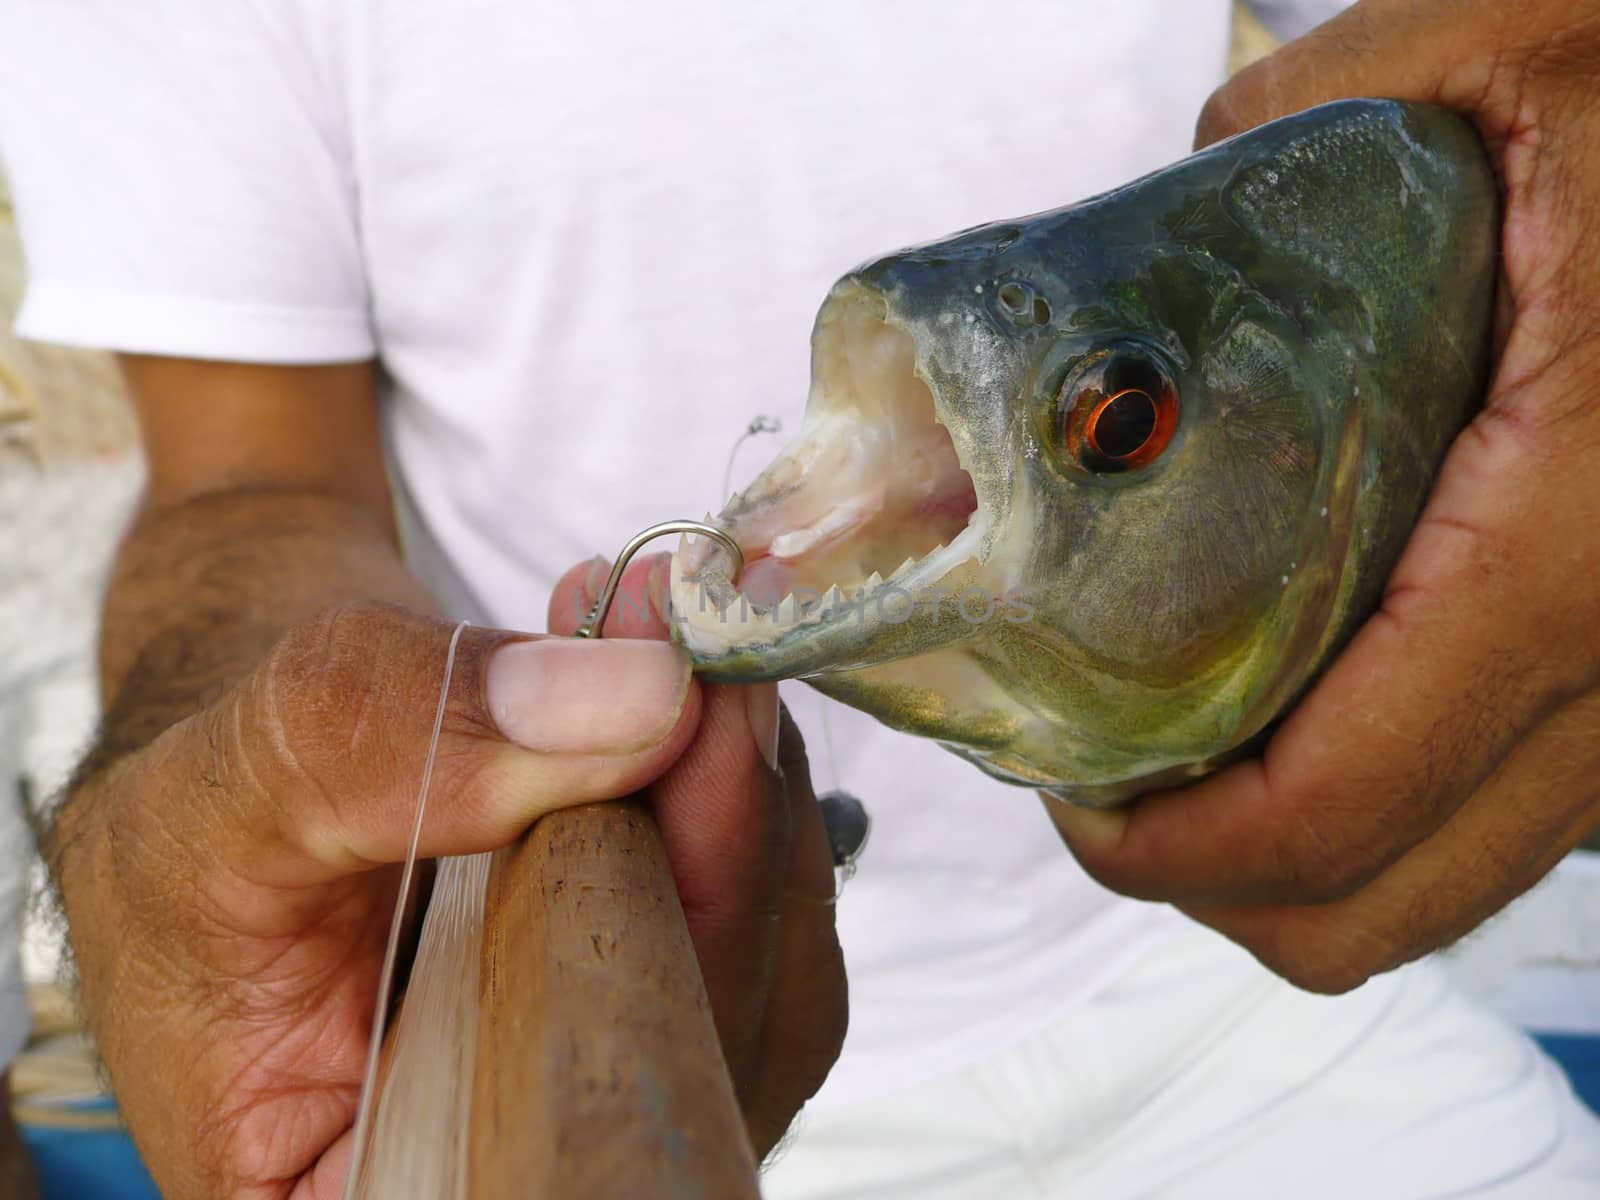 Piranha caught on hook in Amazon river